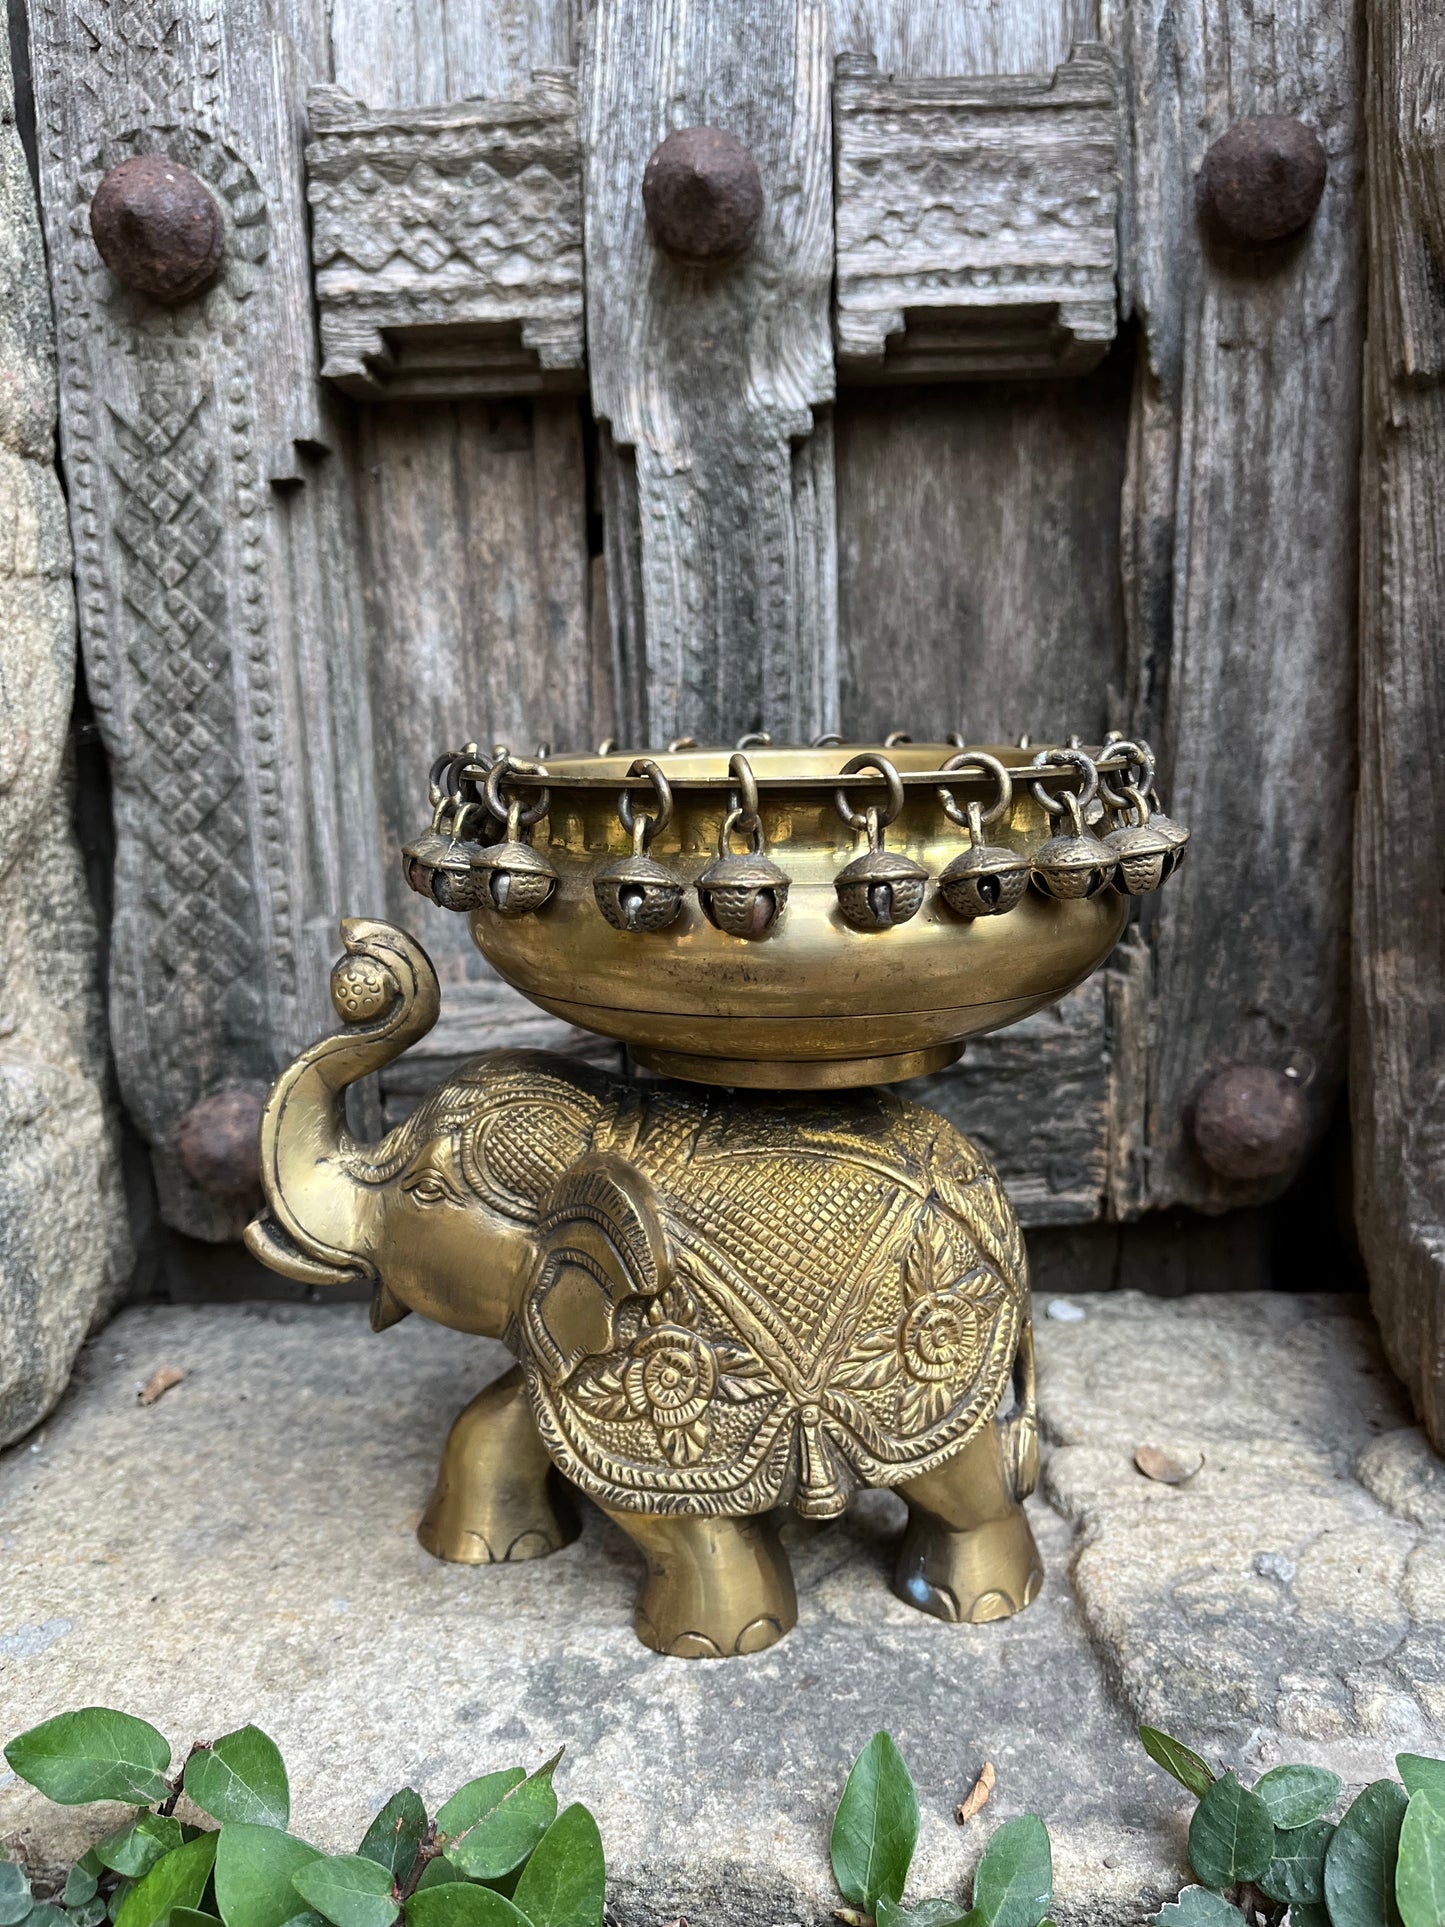 Decorative Elephant Brass Urli With Bells 6”